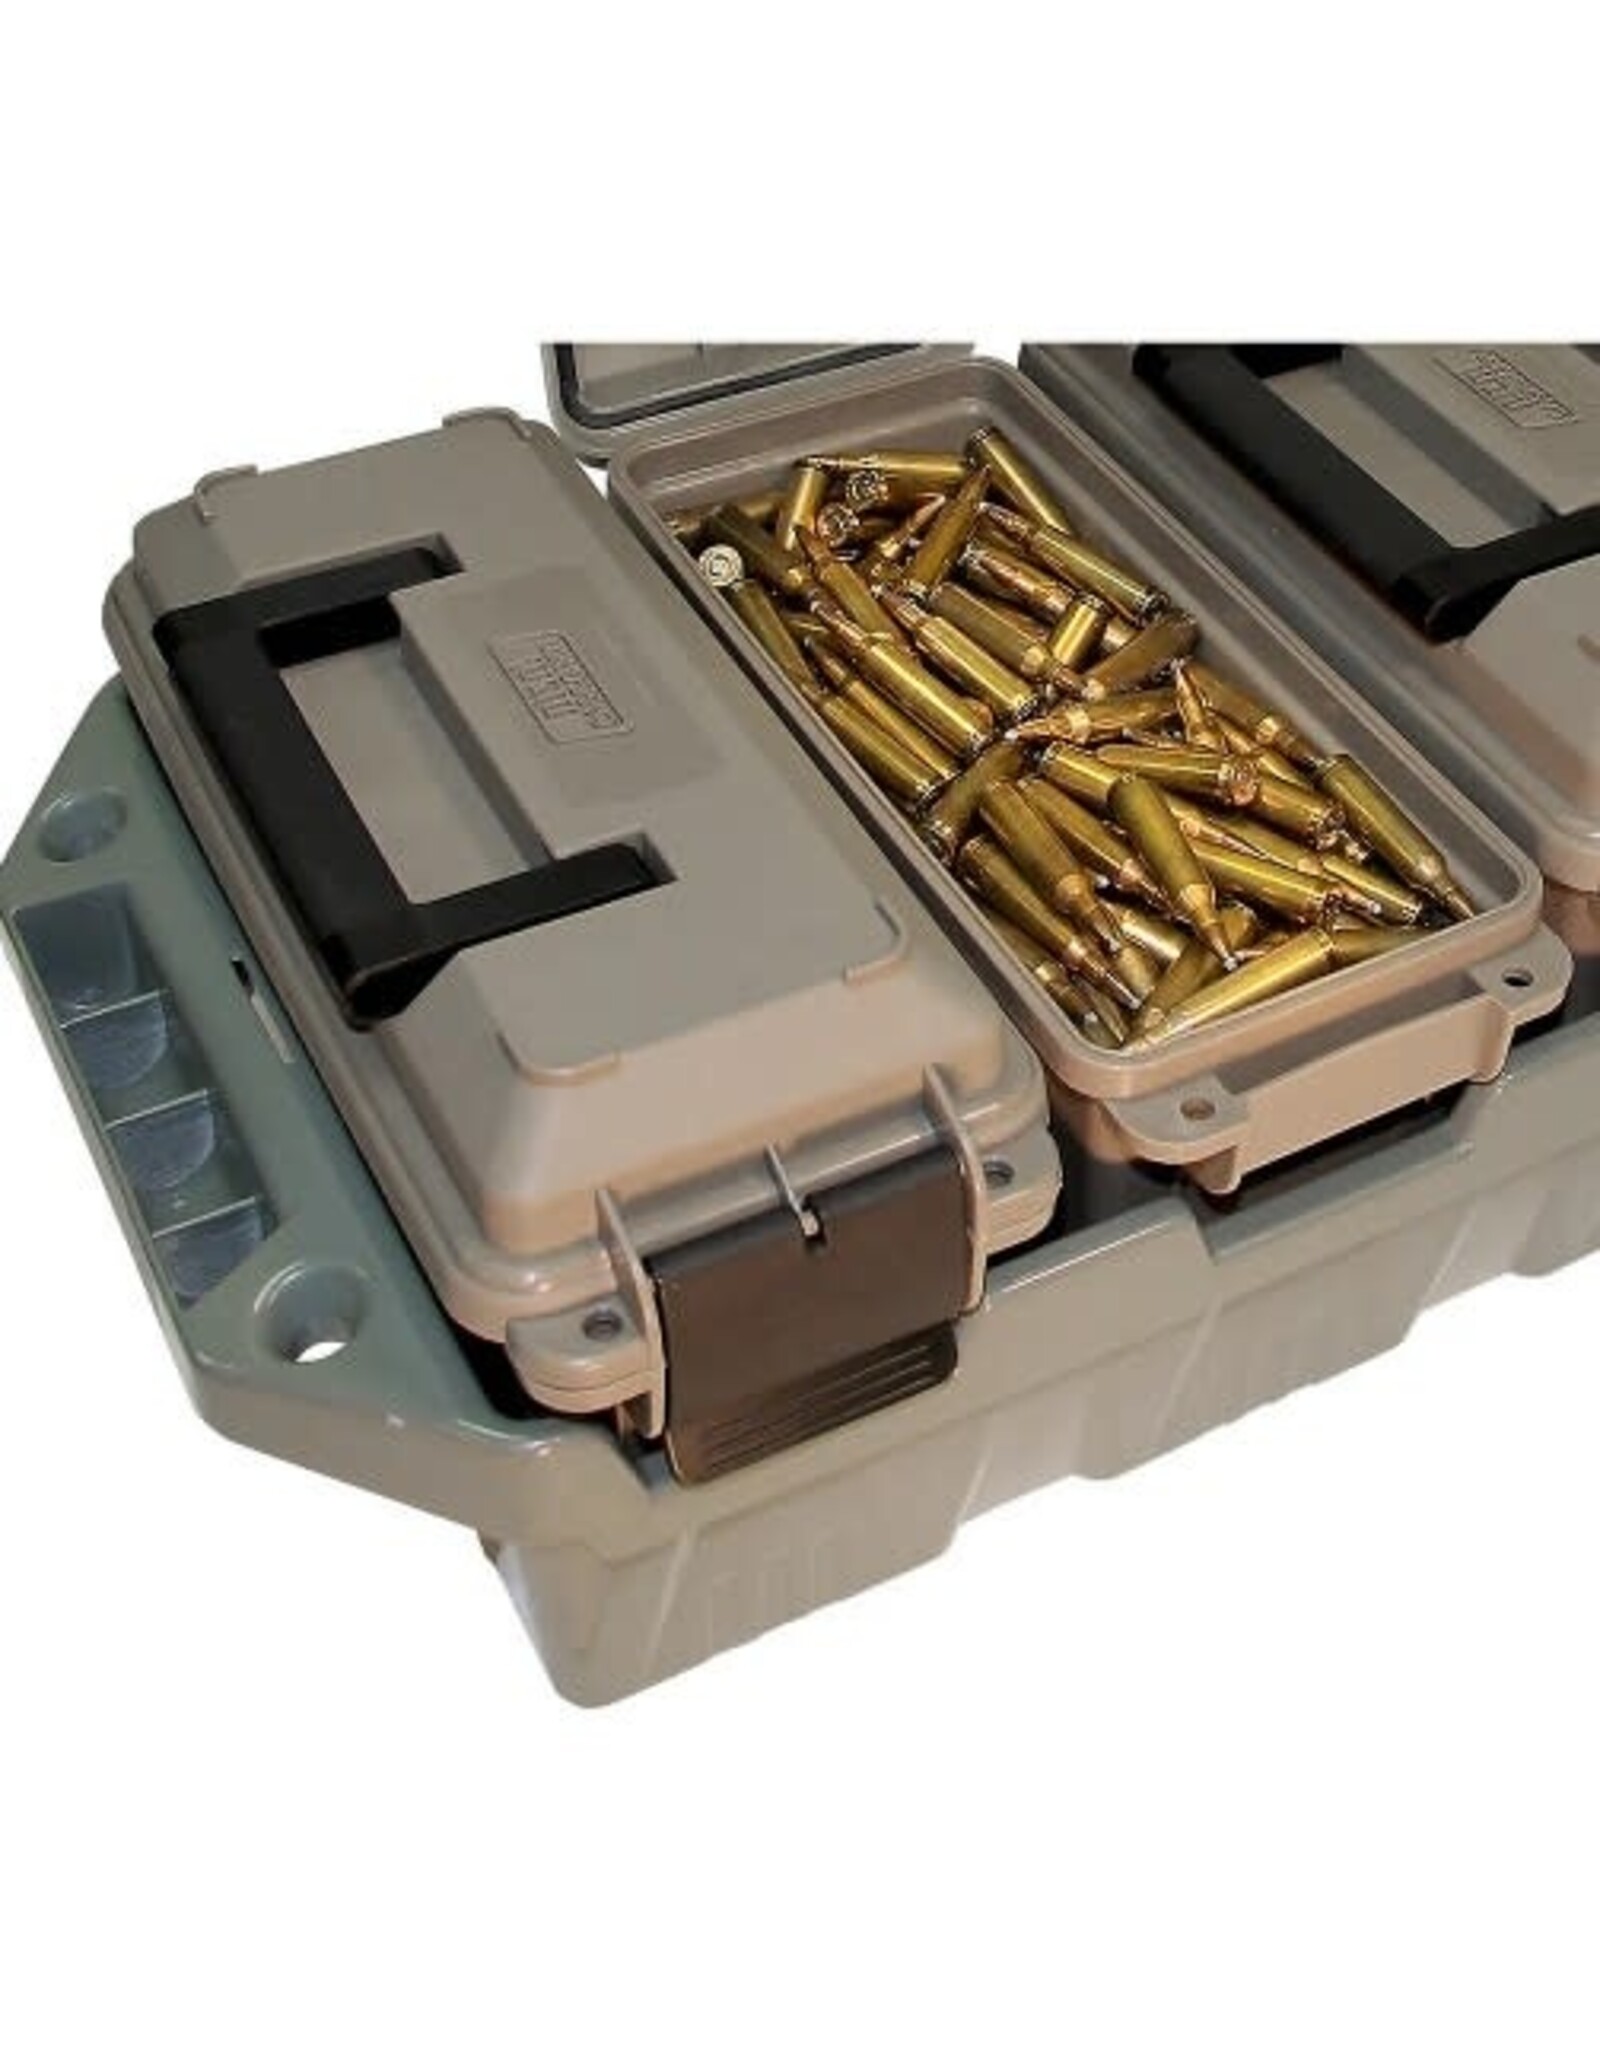 MTM Case-Gard™ 4-Can Ammo Crate